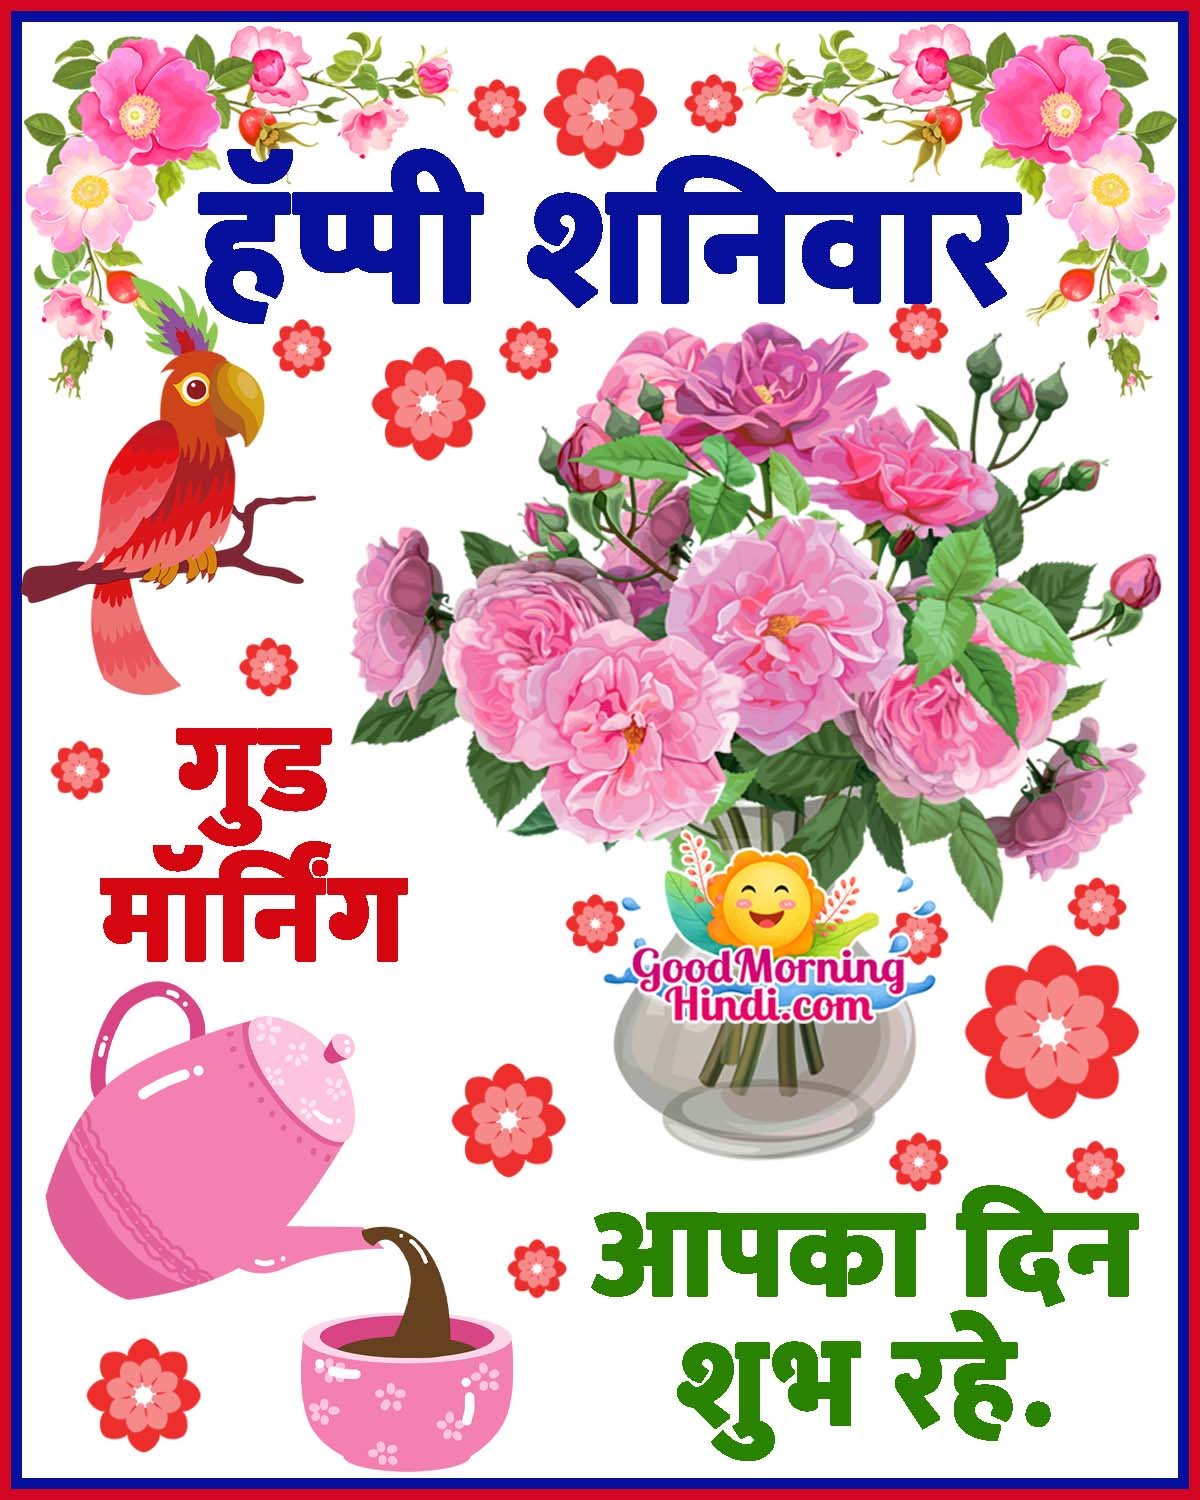 Good Morning Happy Saturday Images In Hindi Good Morning Wishes Images In Hindi